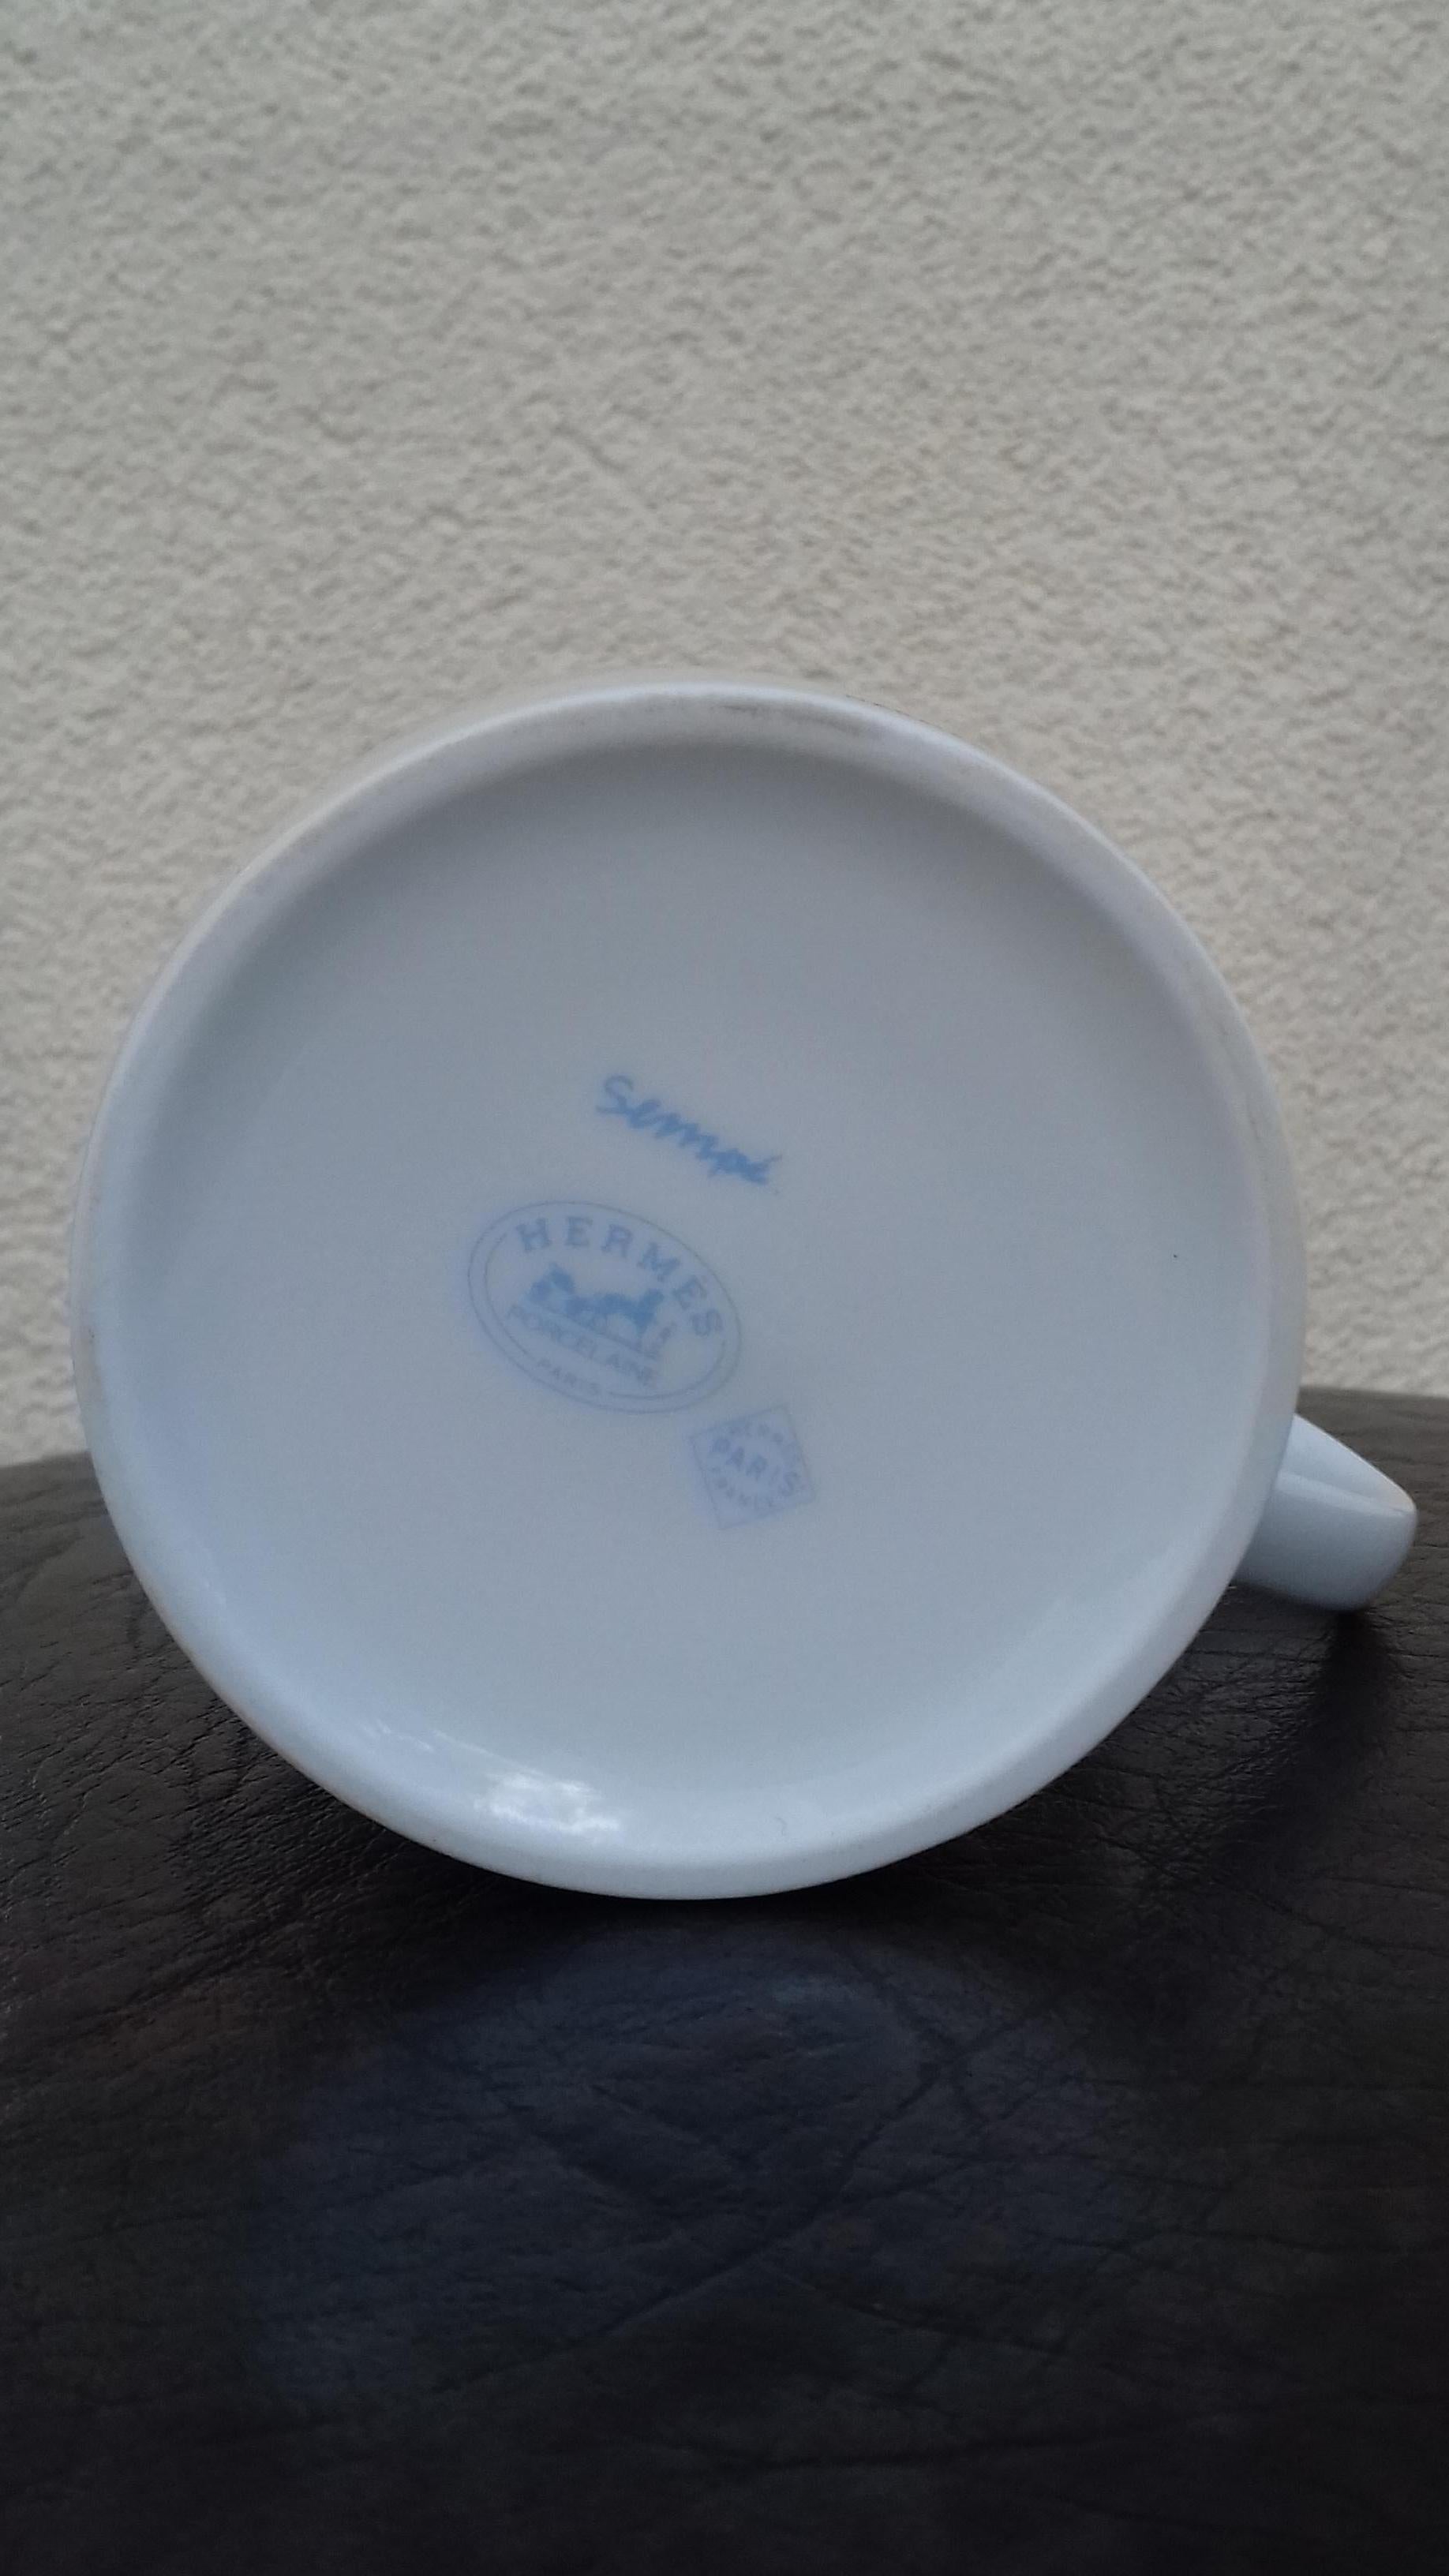 Hermès Porcelain Mug Cup Petit Nicolas First Step in Century Sempé Collector 2